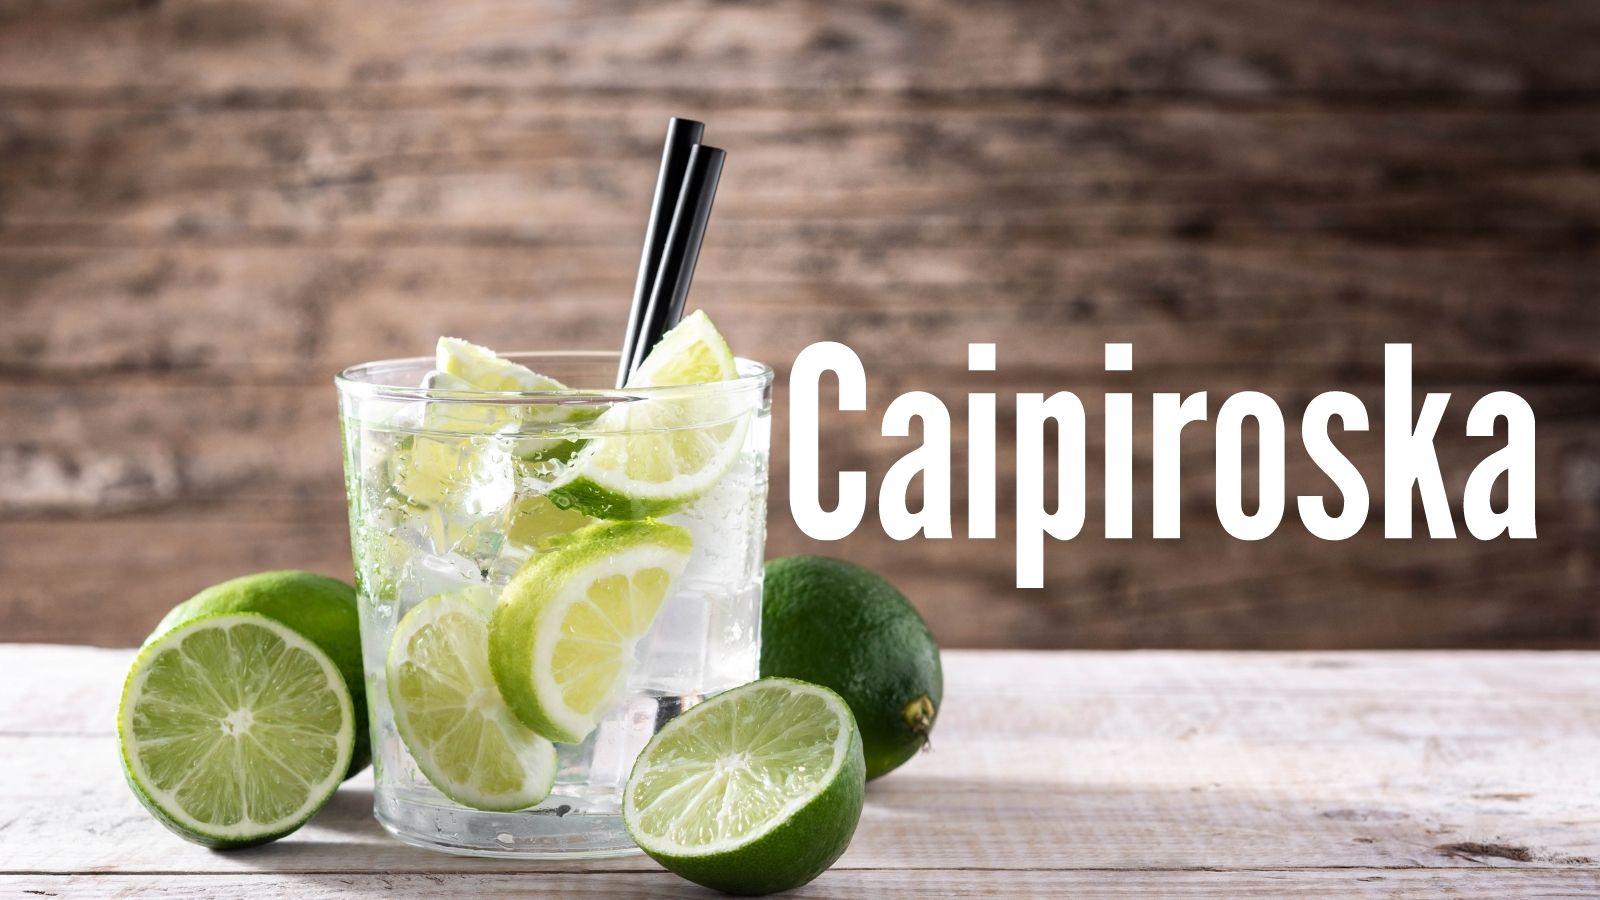 Best Caipiroska Recipe: Simple and Satisfying - cocktaildb.com